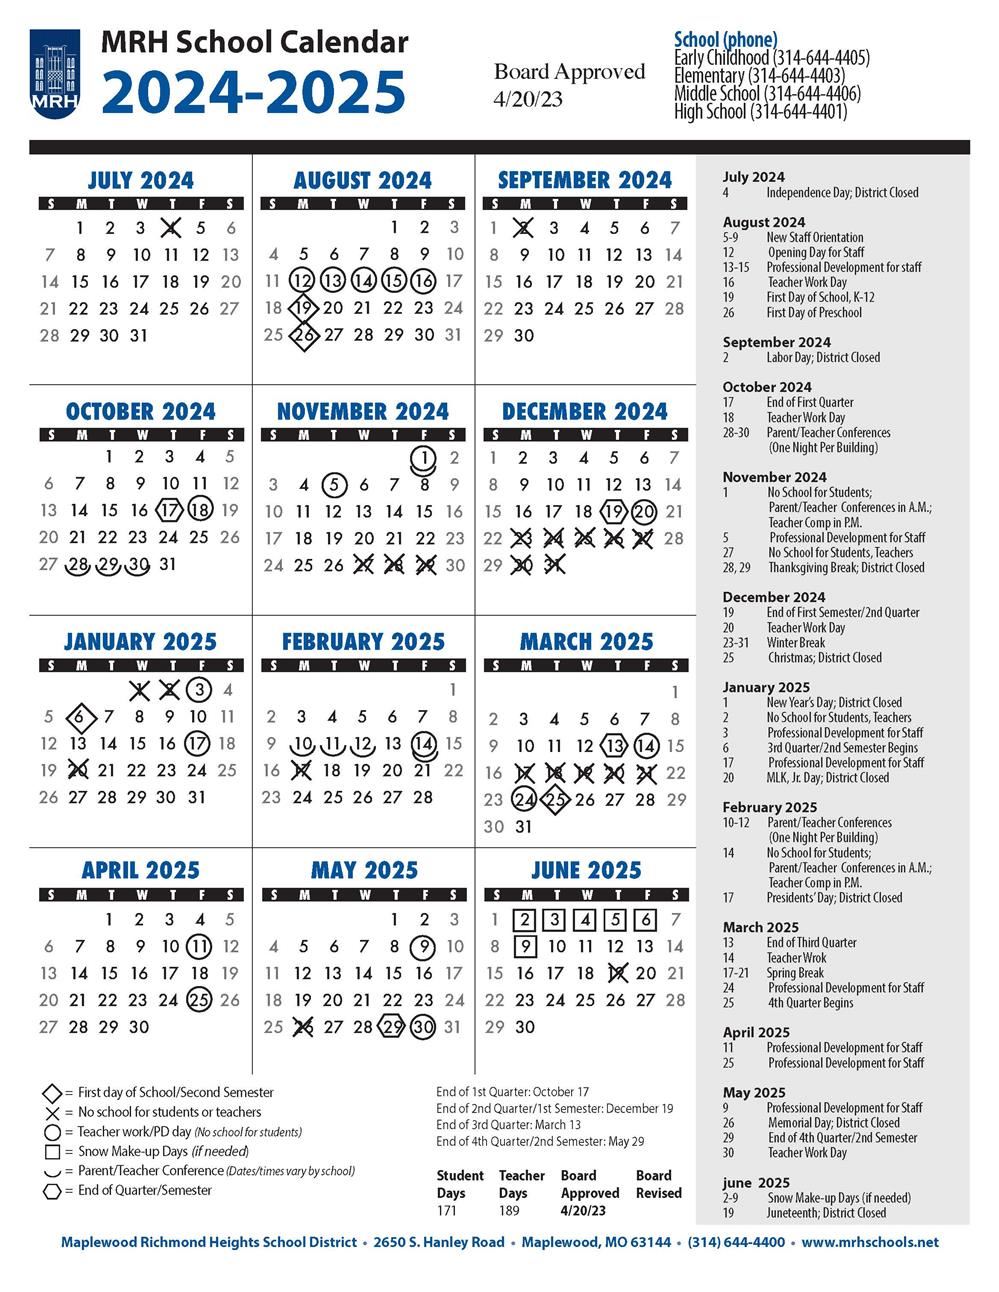 umsl-calendar-2024-2025-mimi-sharai